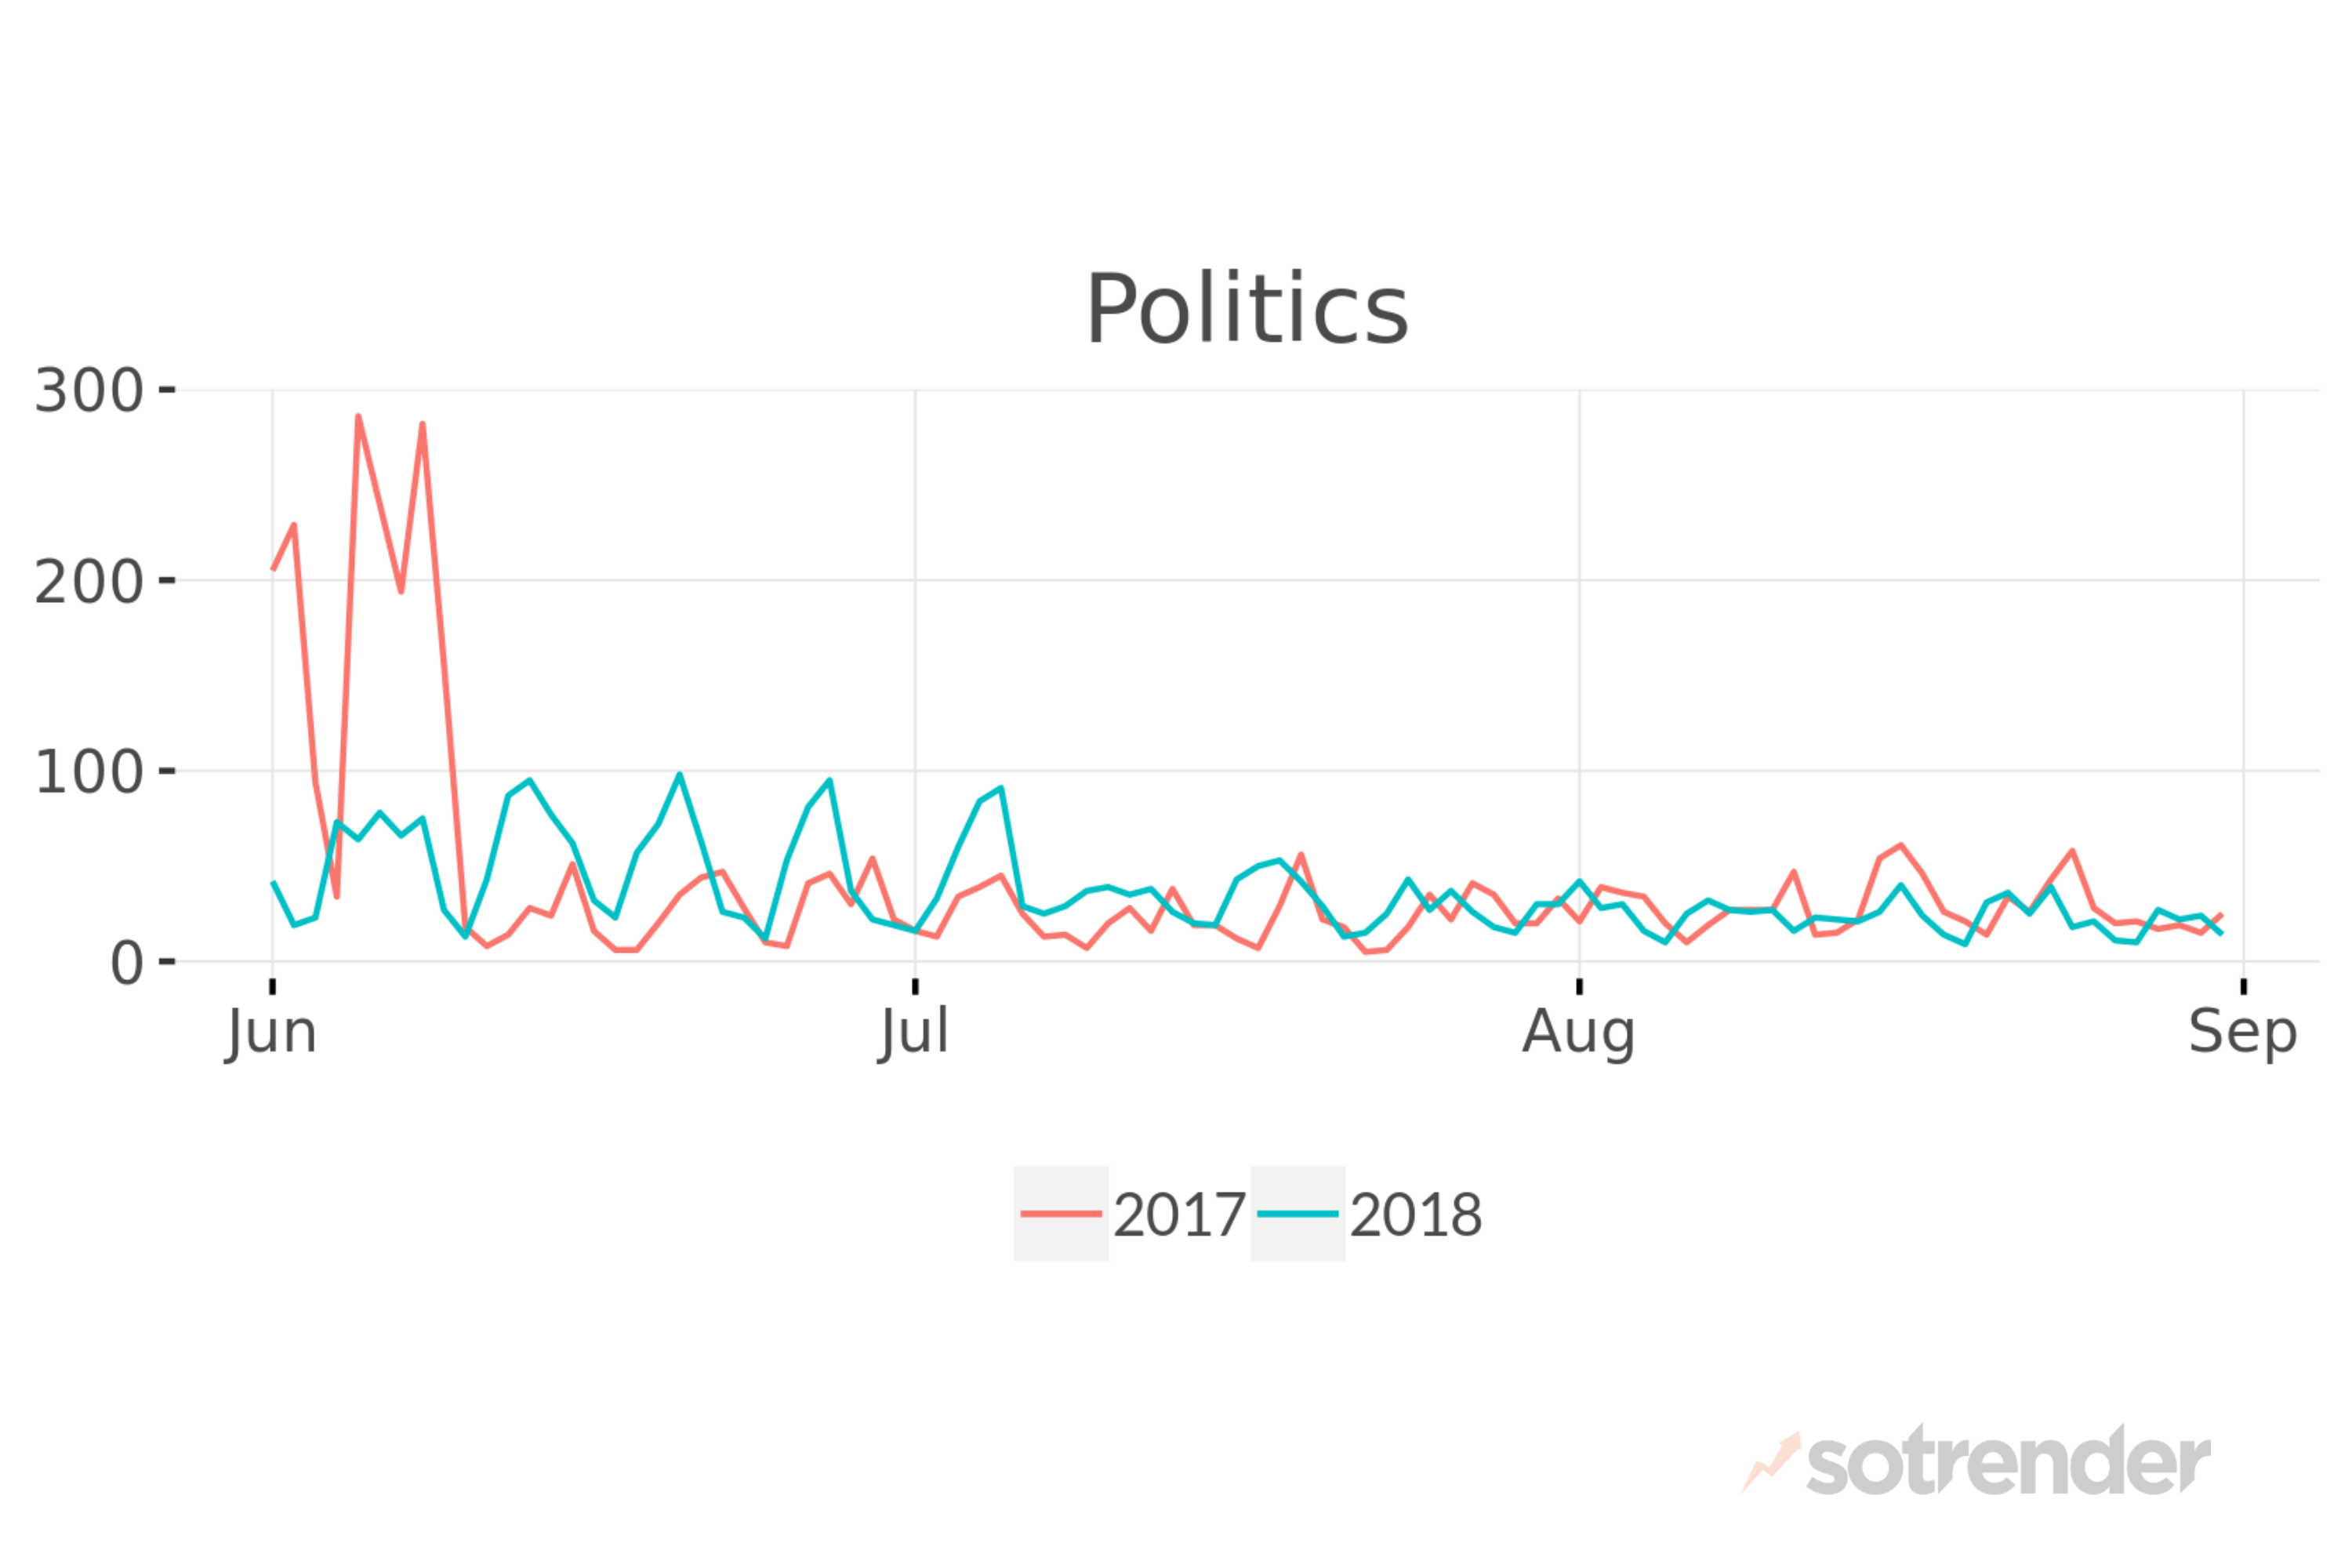 Politics on Twitter 2017 vs 2018